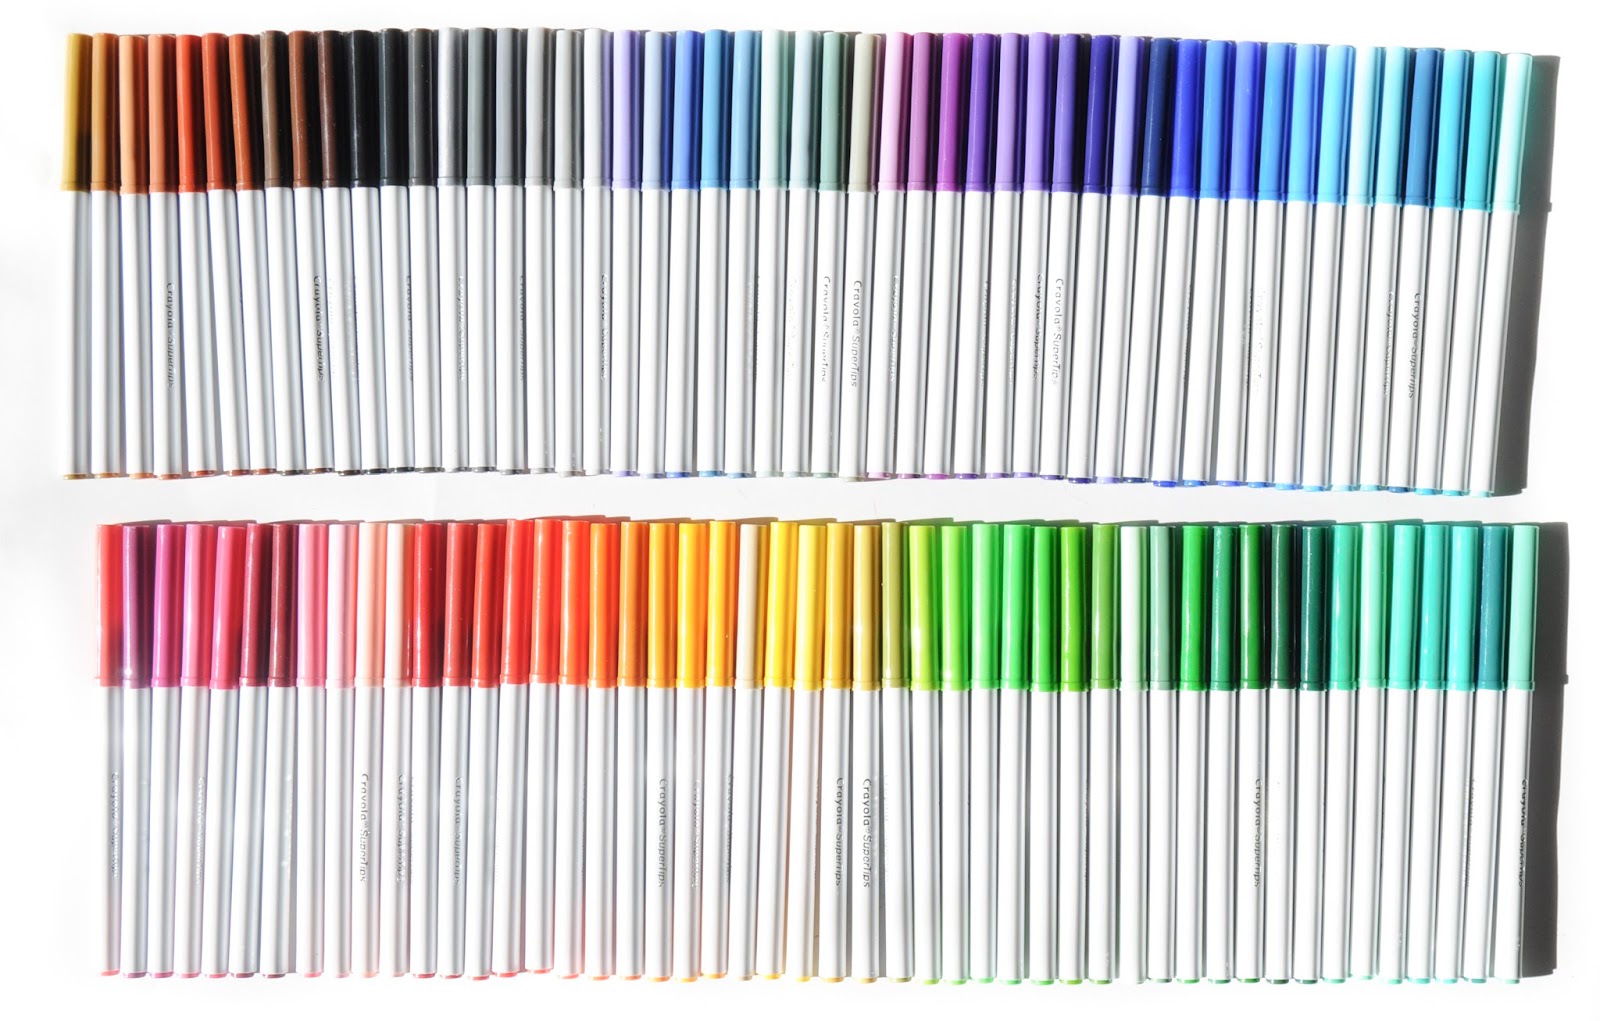 Crayola Supertips Color Chart